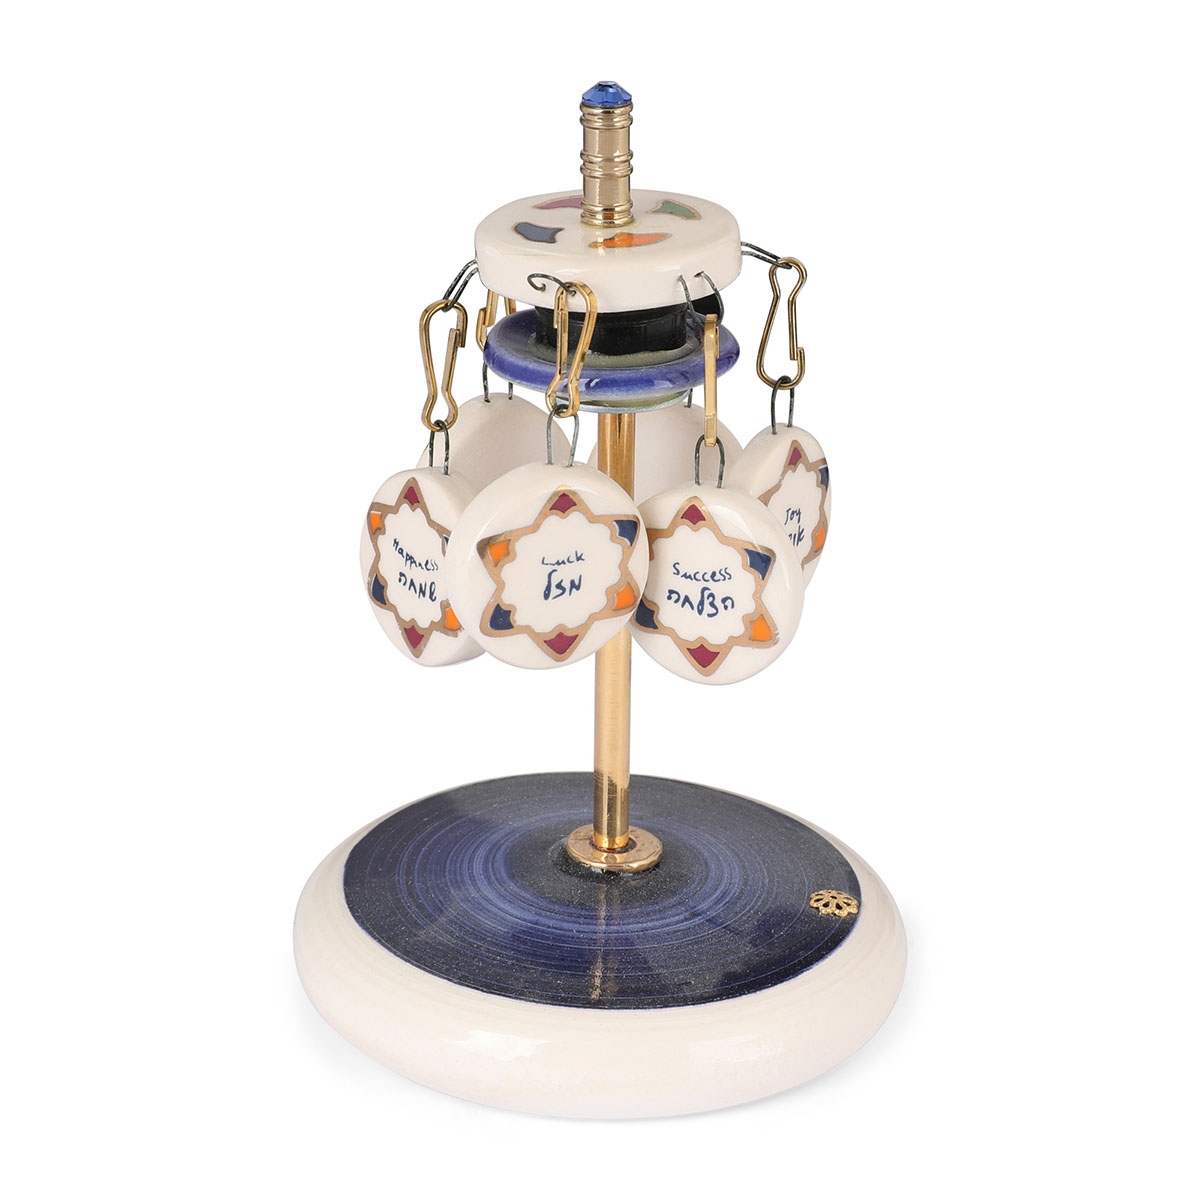 Designer Dreidel Carousel With Hebrew-English Home Blessings (Stars of David) - 1